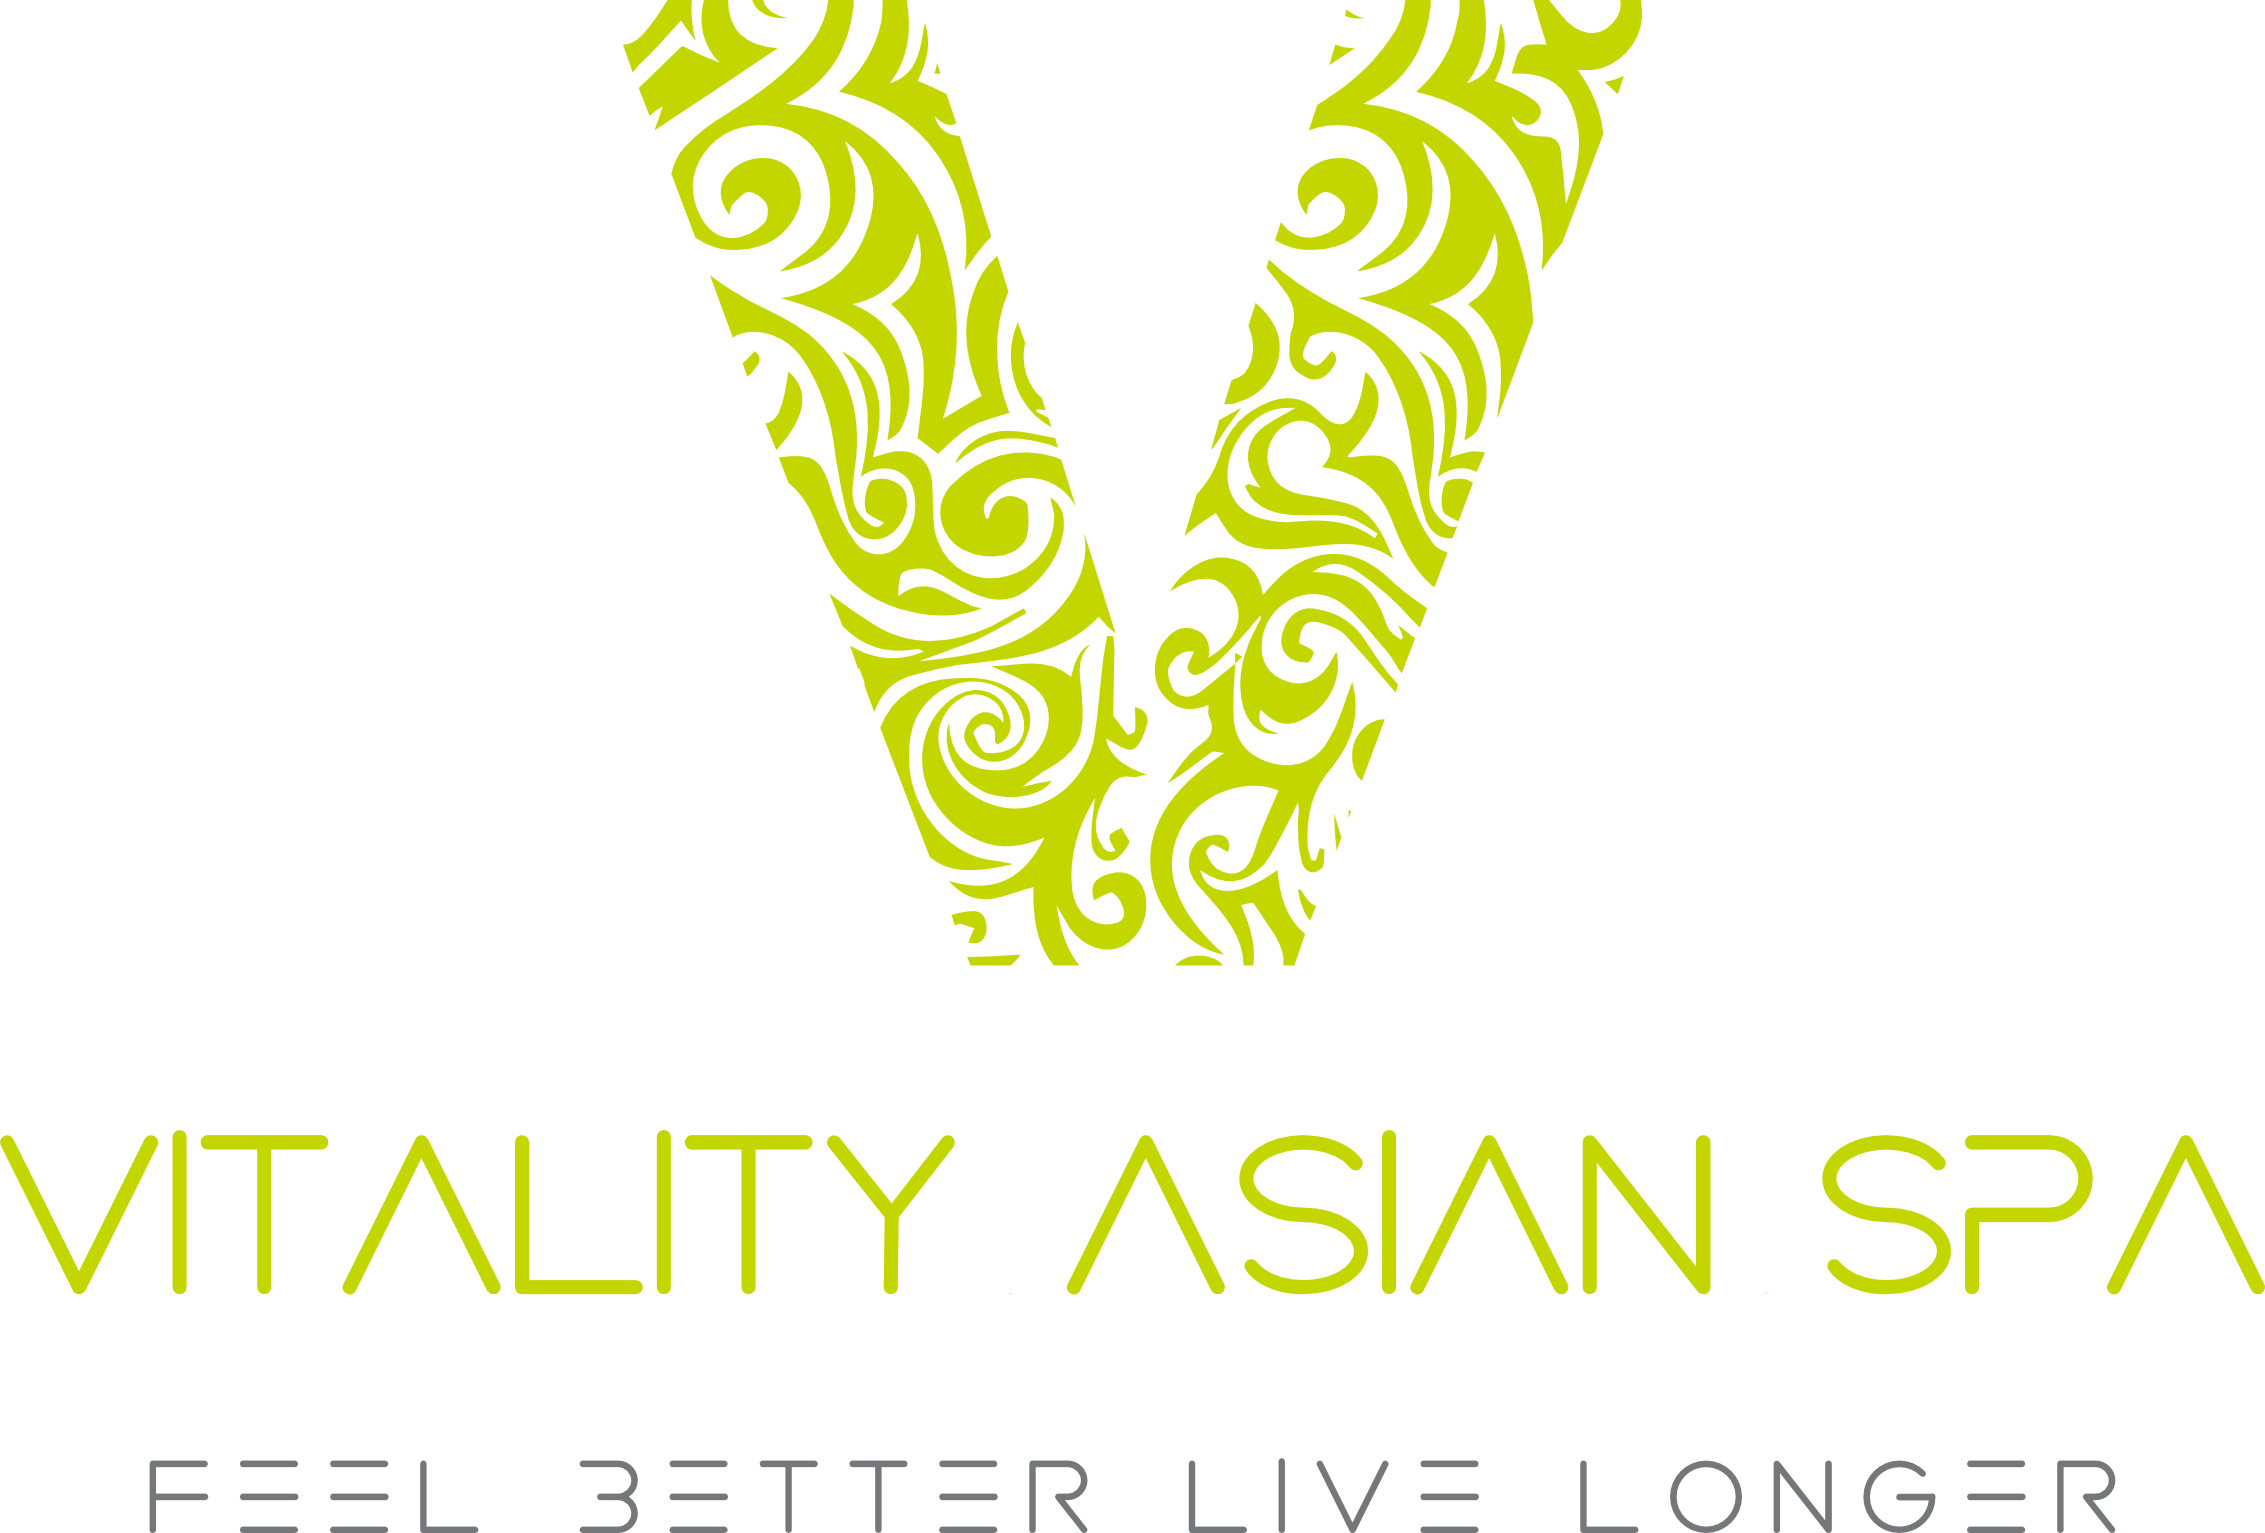 Vitality Asian Spa